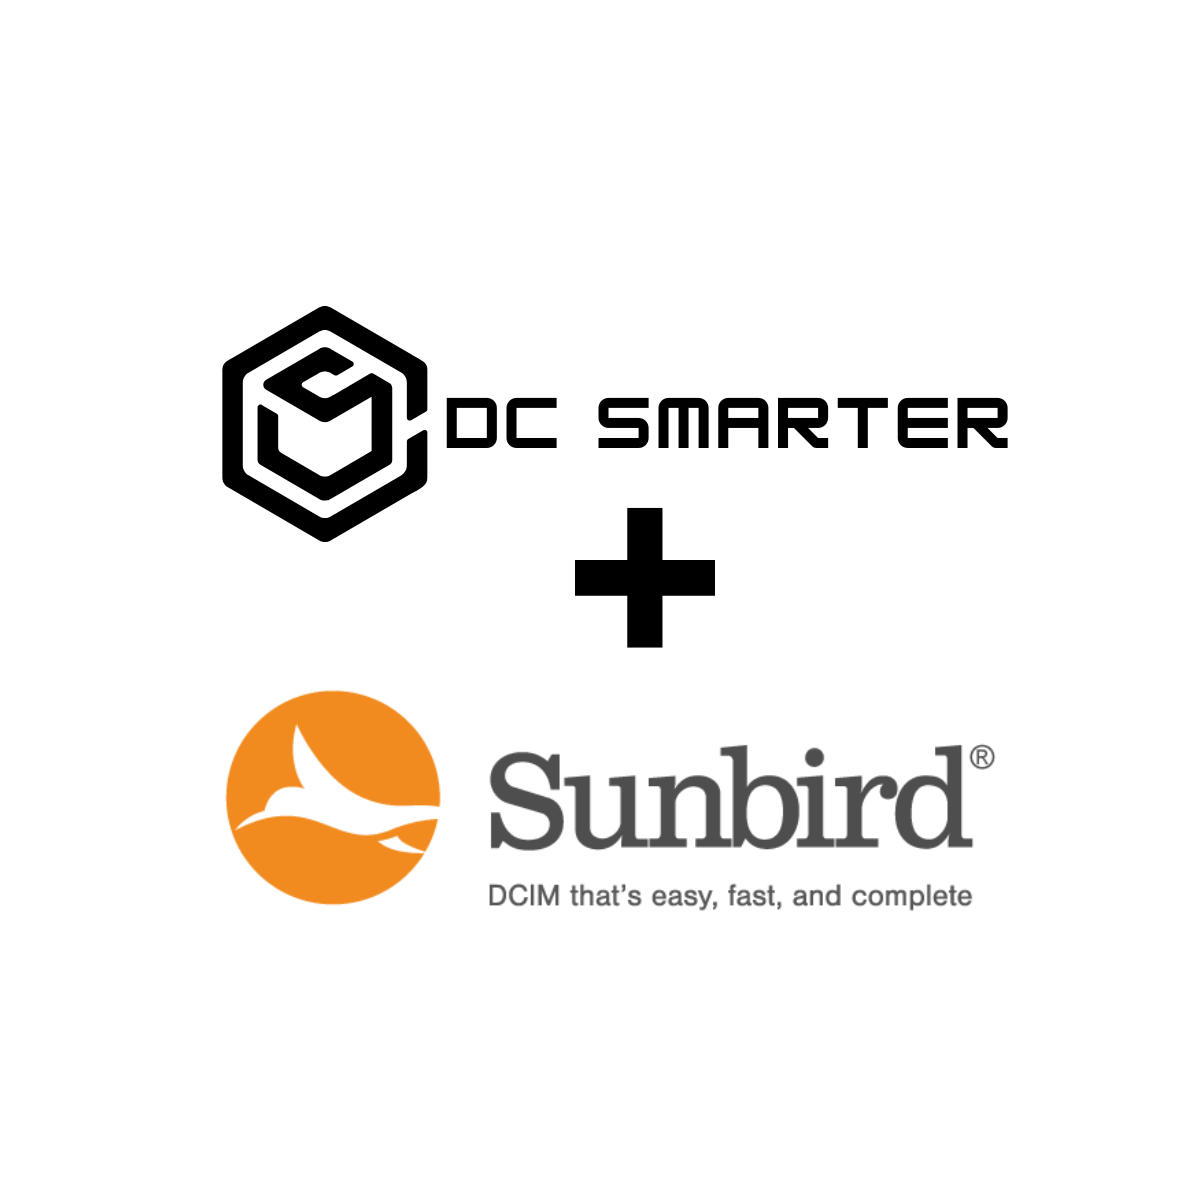 DC Smarter and Sunbird Software partnership